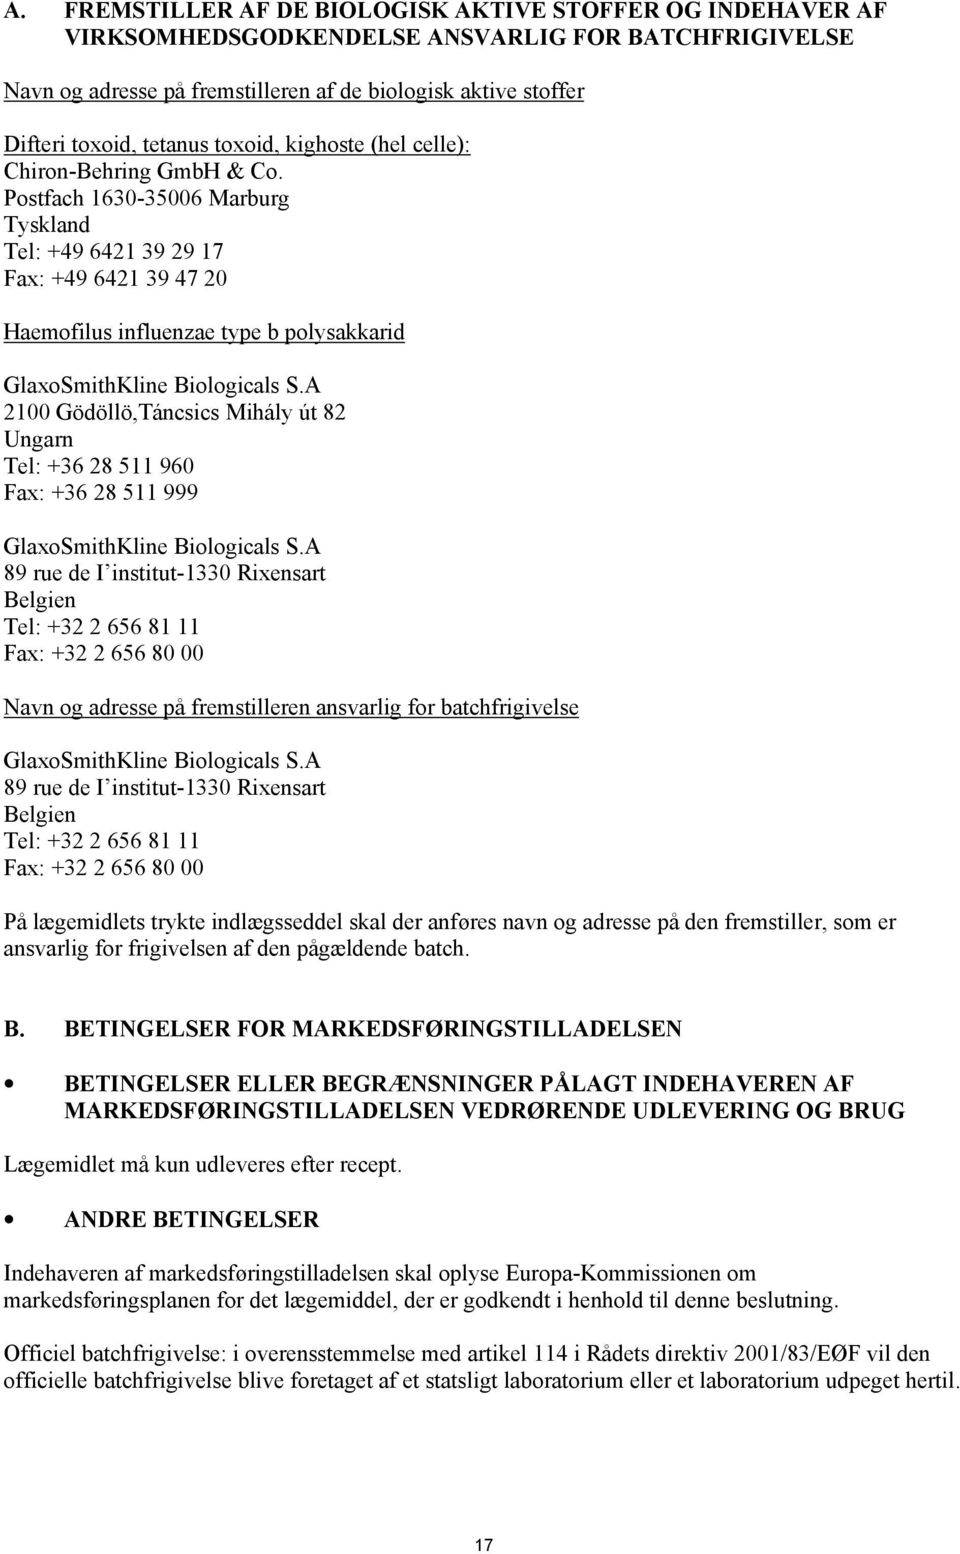 Postfach 1630-35006 Marburg Tyskland Tel: +49 6421 39 29 17 Fax: +49 6421 39 47 20 Haemofilus influenzae type b polysakkarid GlaxoSmithKline Biologicals S.